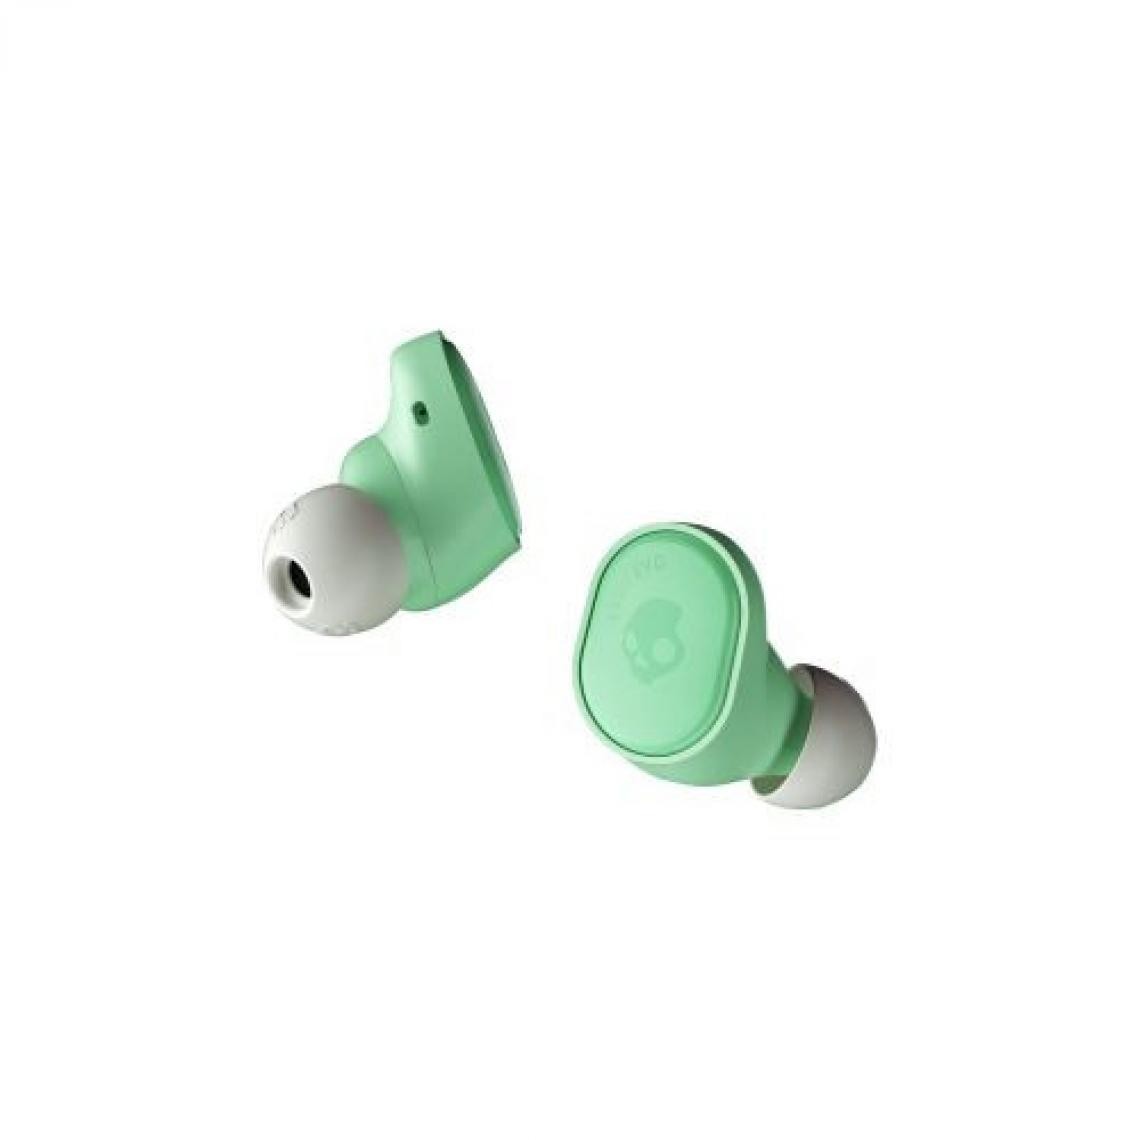 Skullcandy - Ecouteurs sans fil True Wireless Skullcandy Sesh Evo Vert - Ecouteurs intra-auriculaires